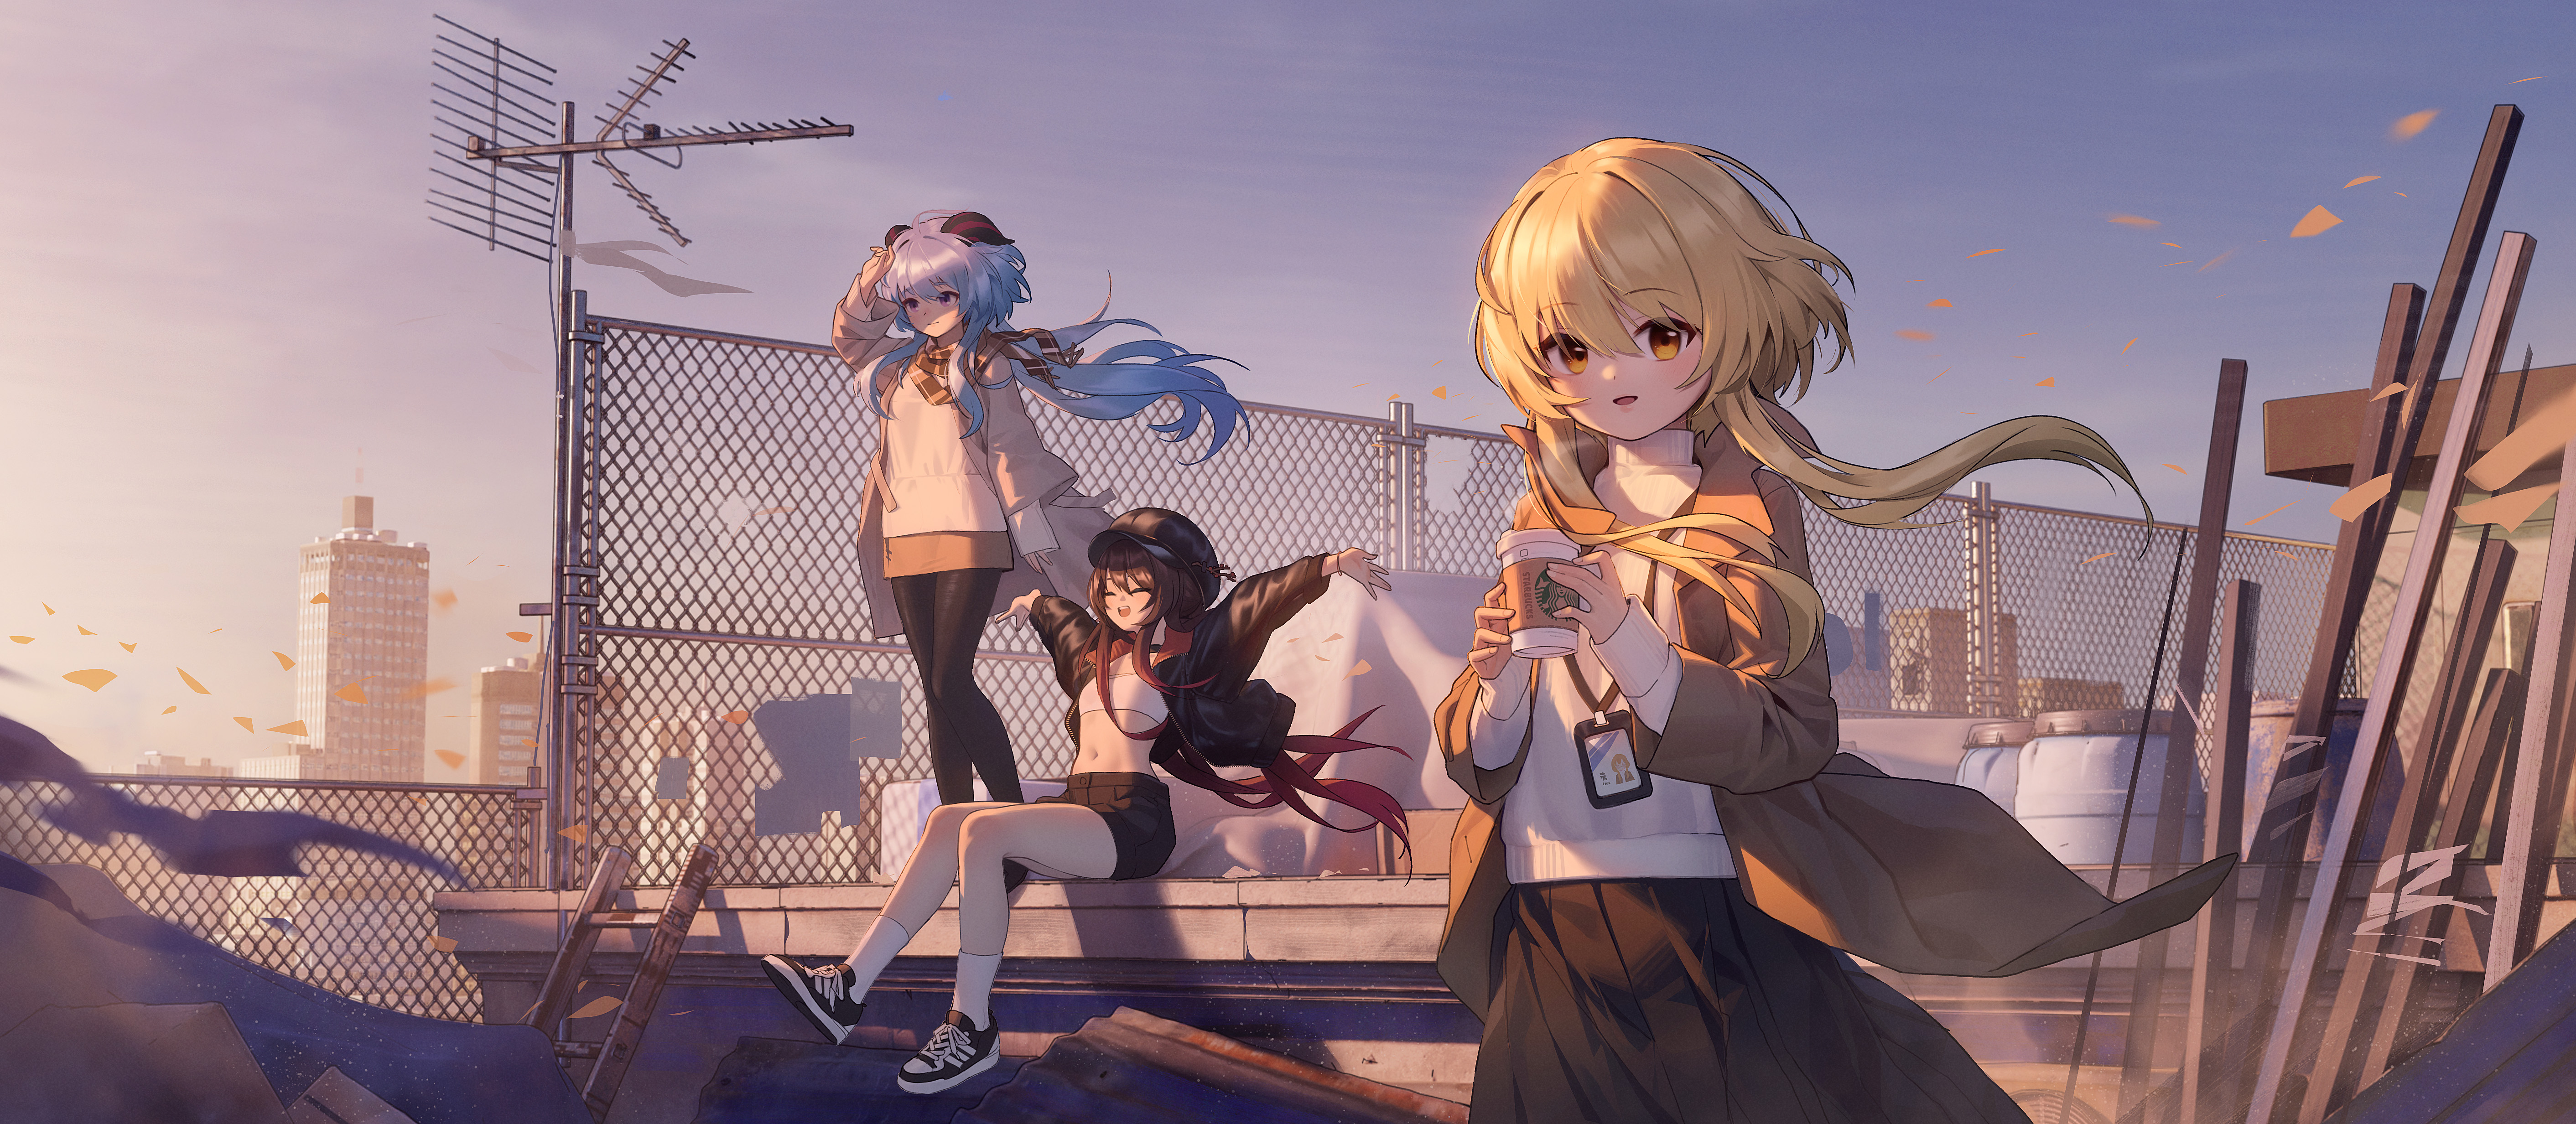 Anime Anime Girls Digital Art 2D Artwork Pixiv Looking At Viewer Outdoors Clear Sky Bare Midriff Gan 5648x2465